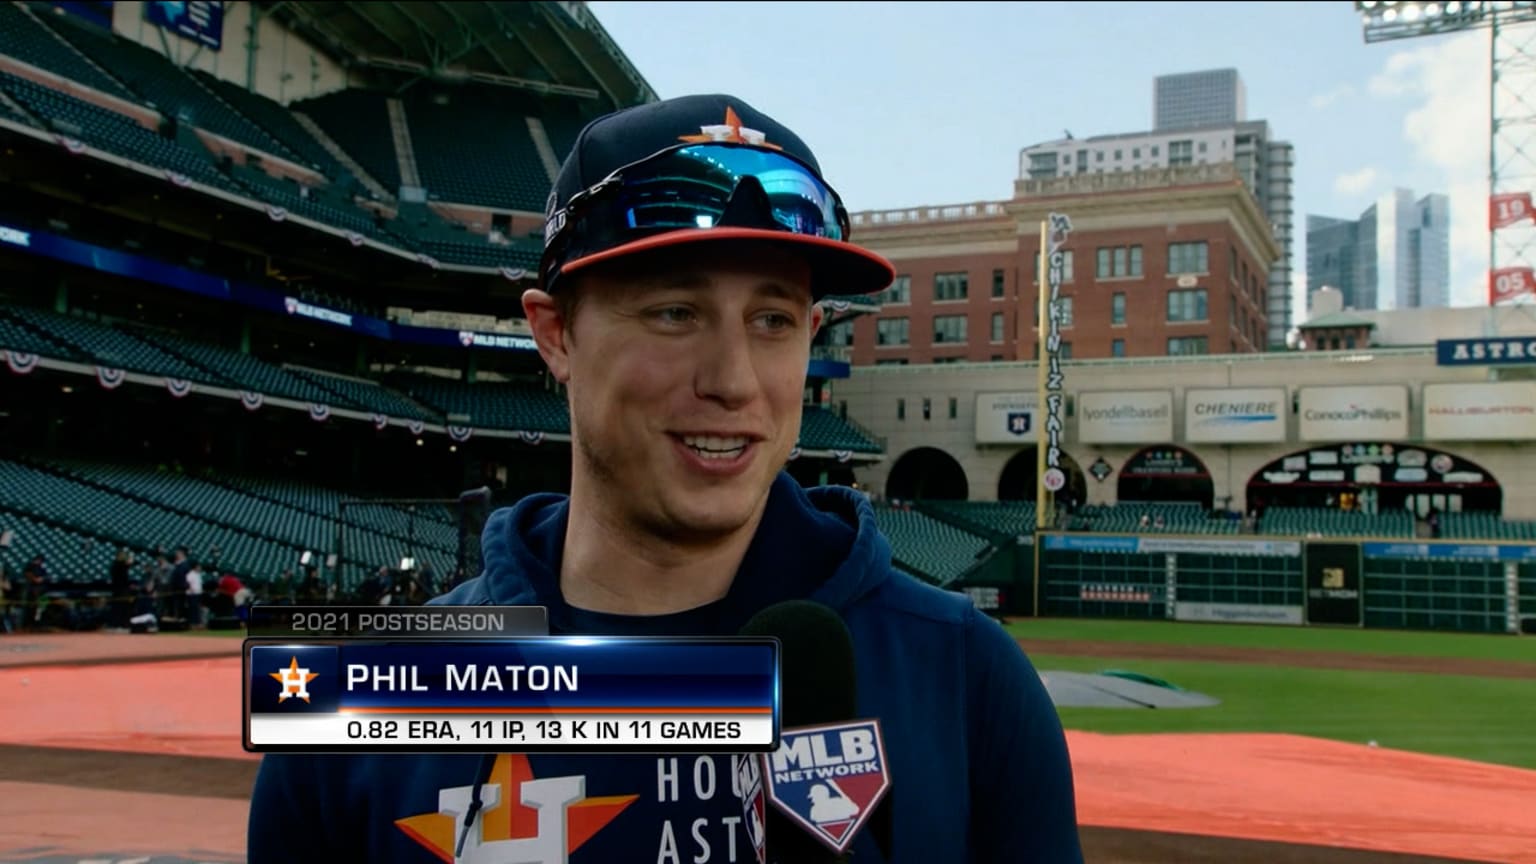 Phil Maton on the World Series, 11/03/2021